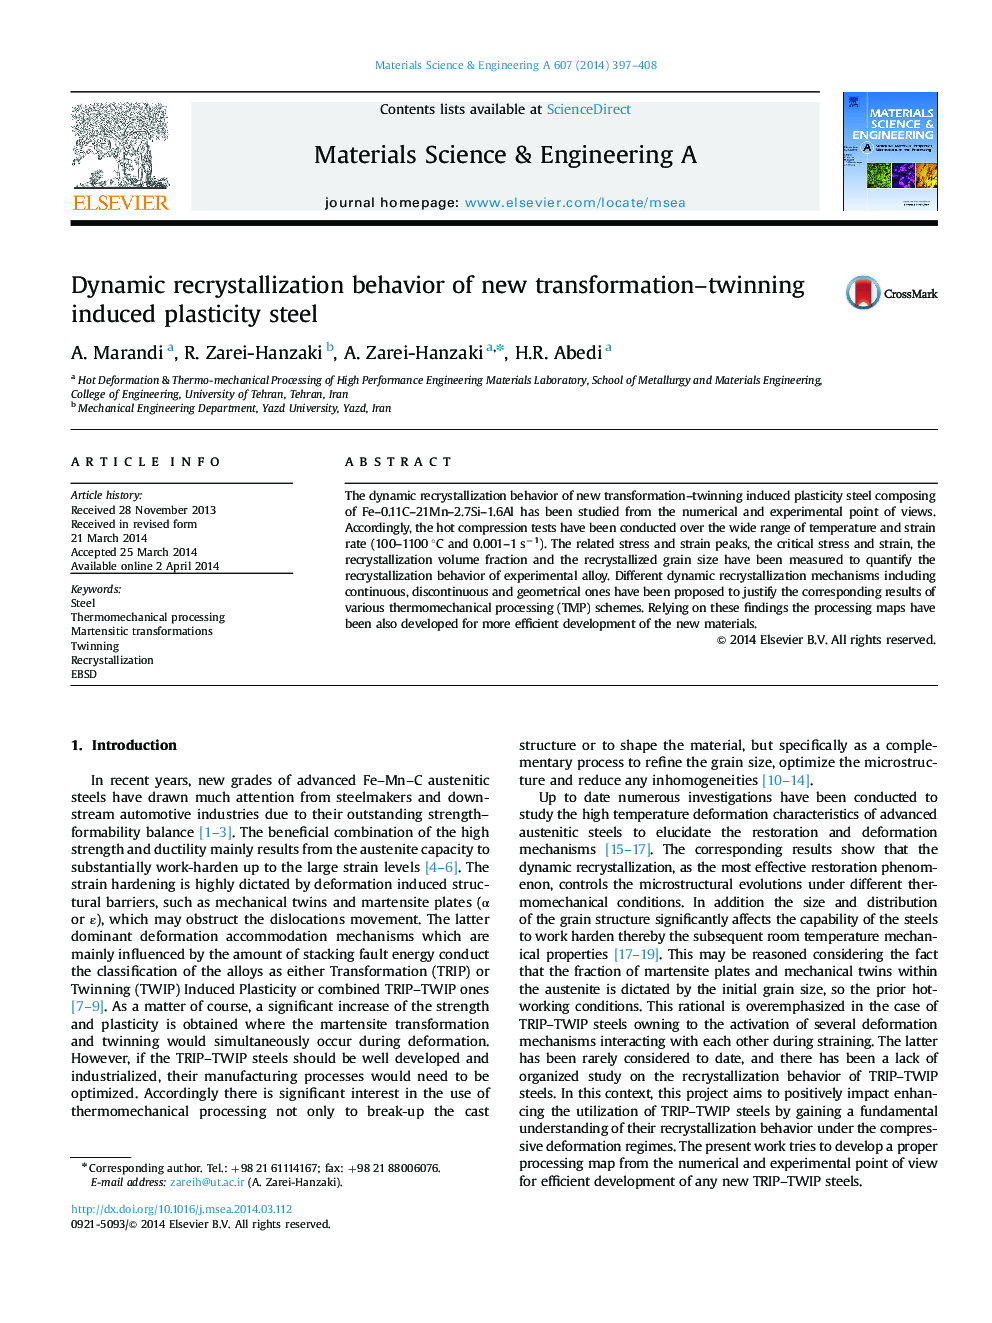 Dynamic recrystallization behavior of new transformation-twinning induced plasticity steel